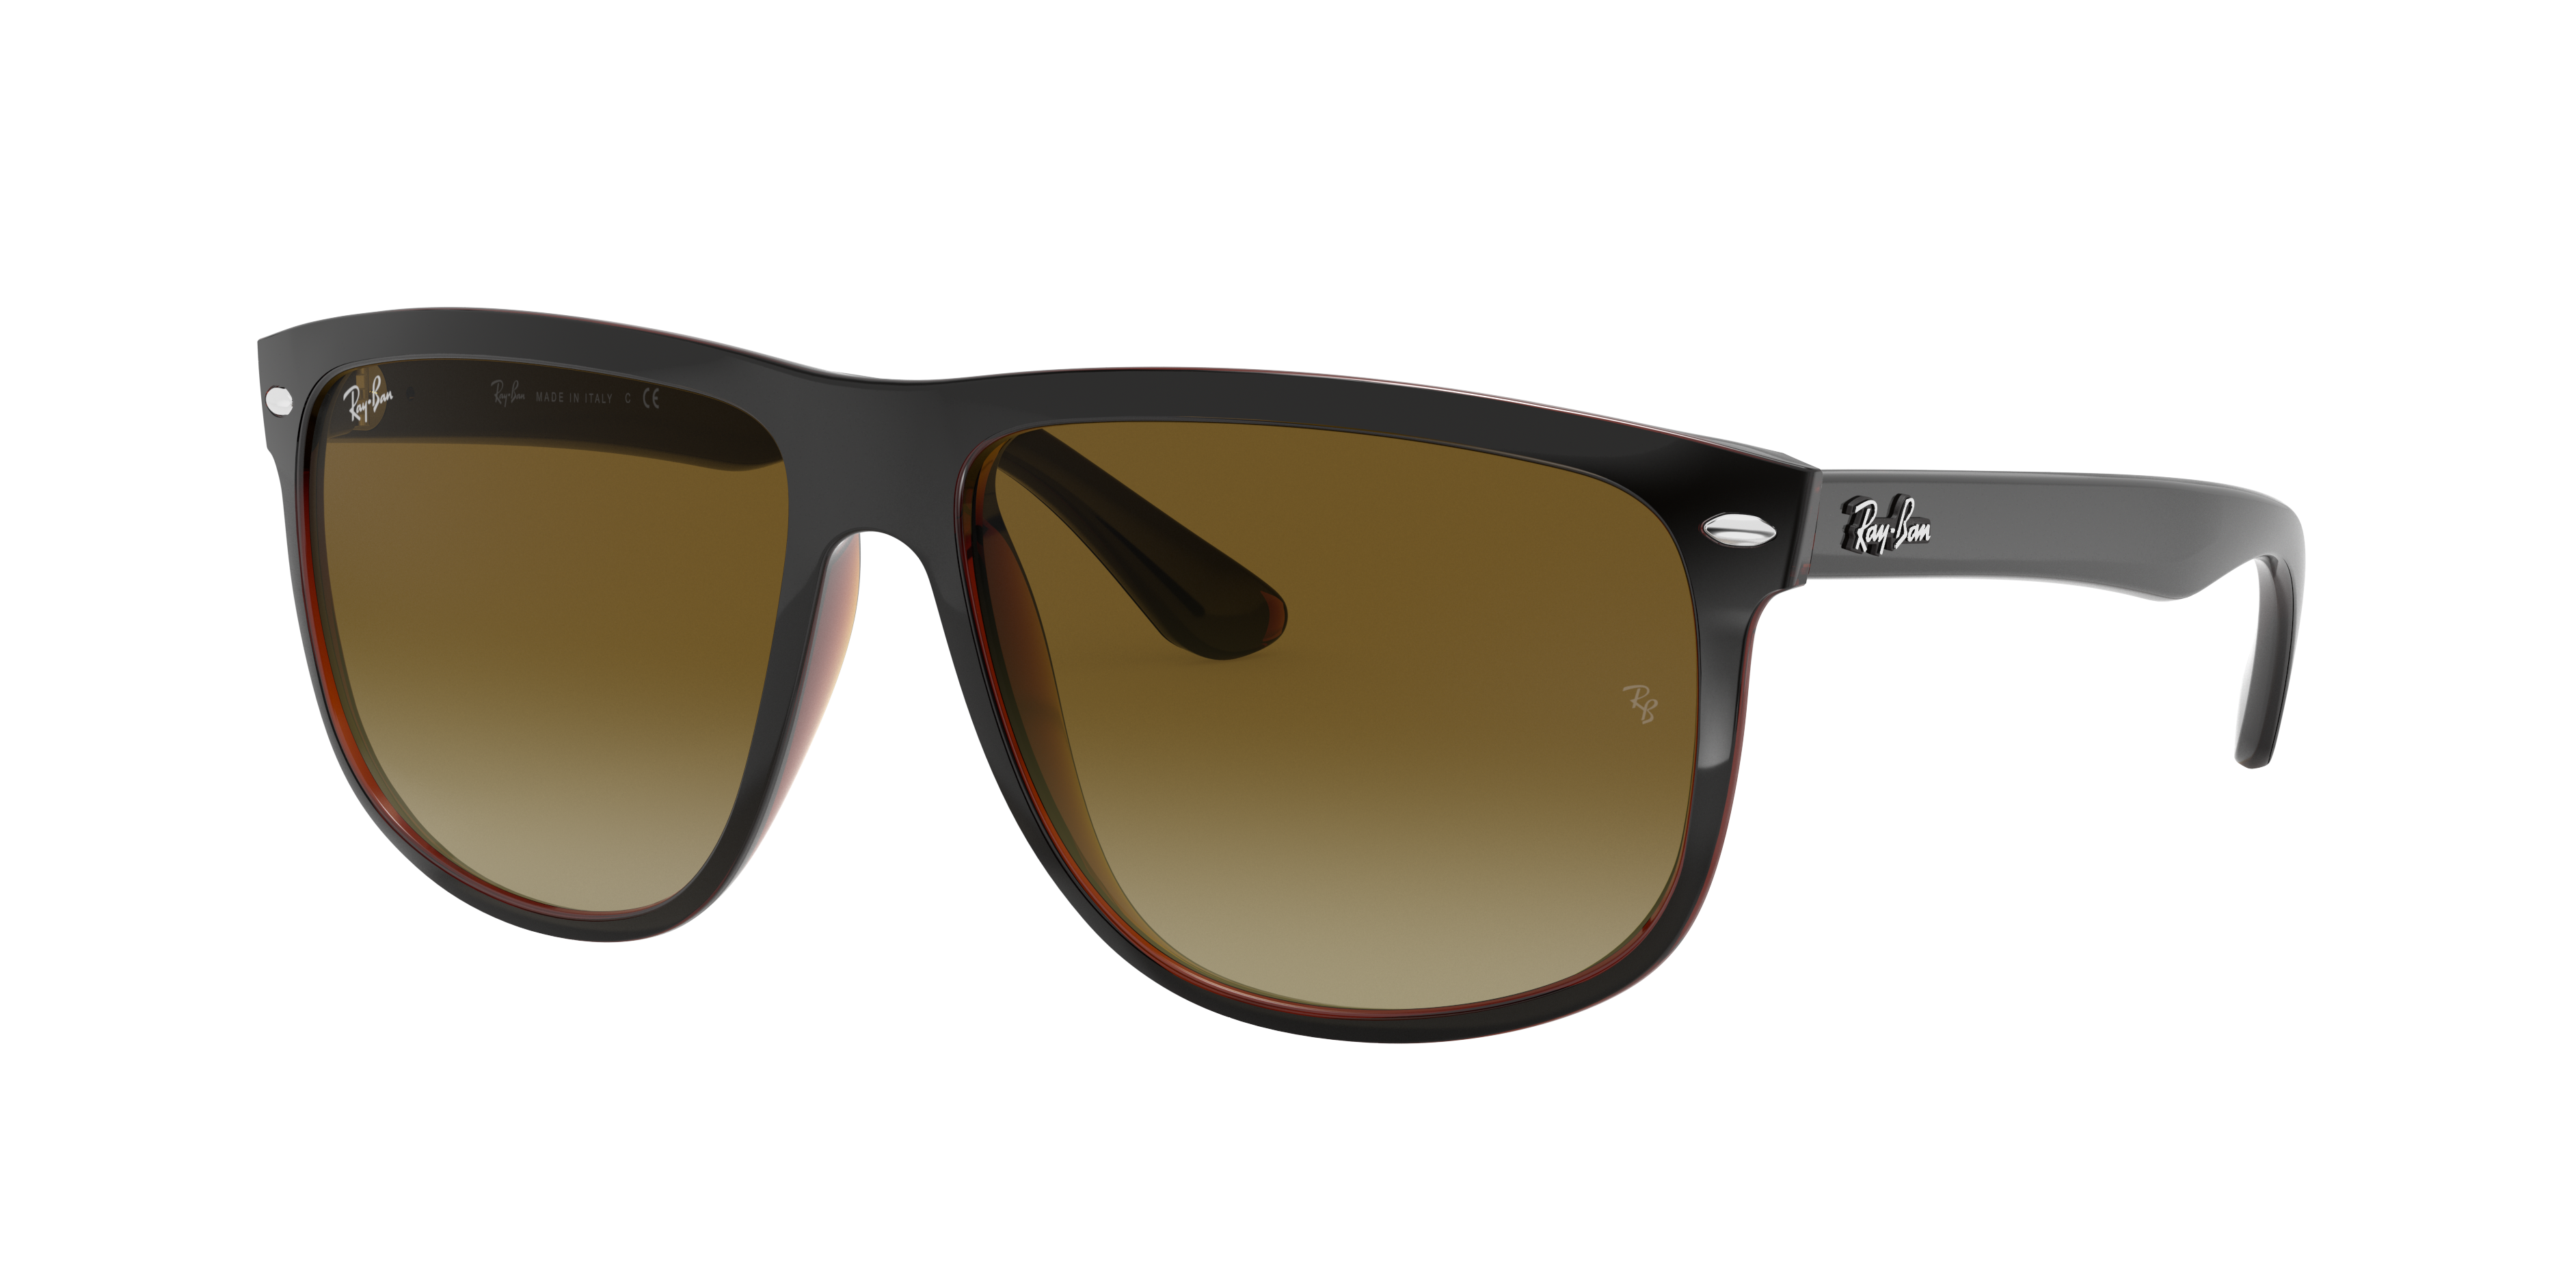 RAY-BAN RB4147 Boyfriend Black On Brown - Men Sunglasses, Brown Gradient  Lens